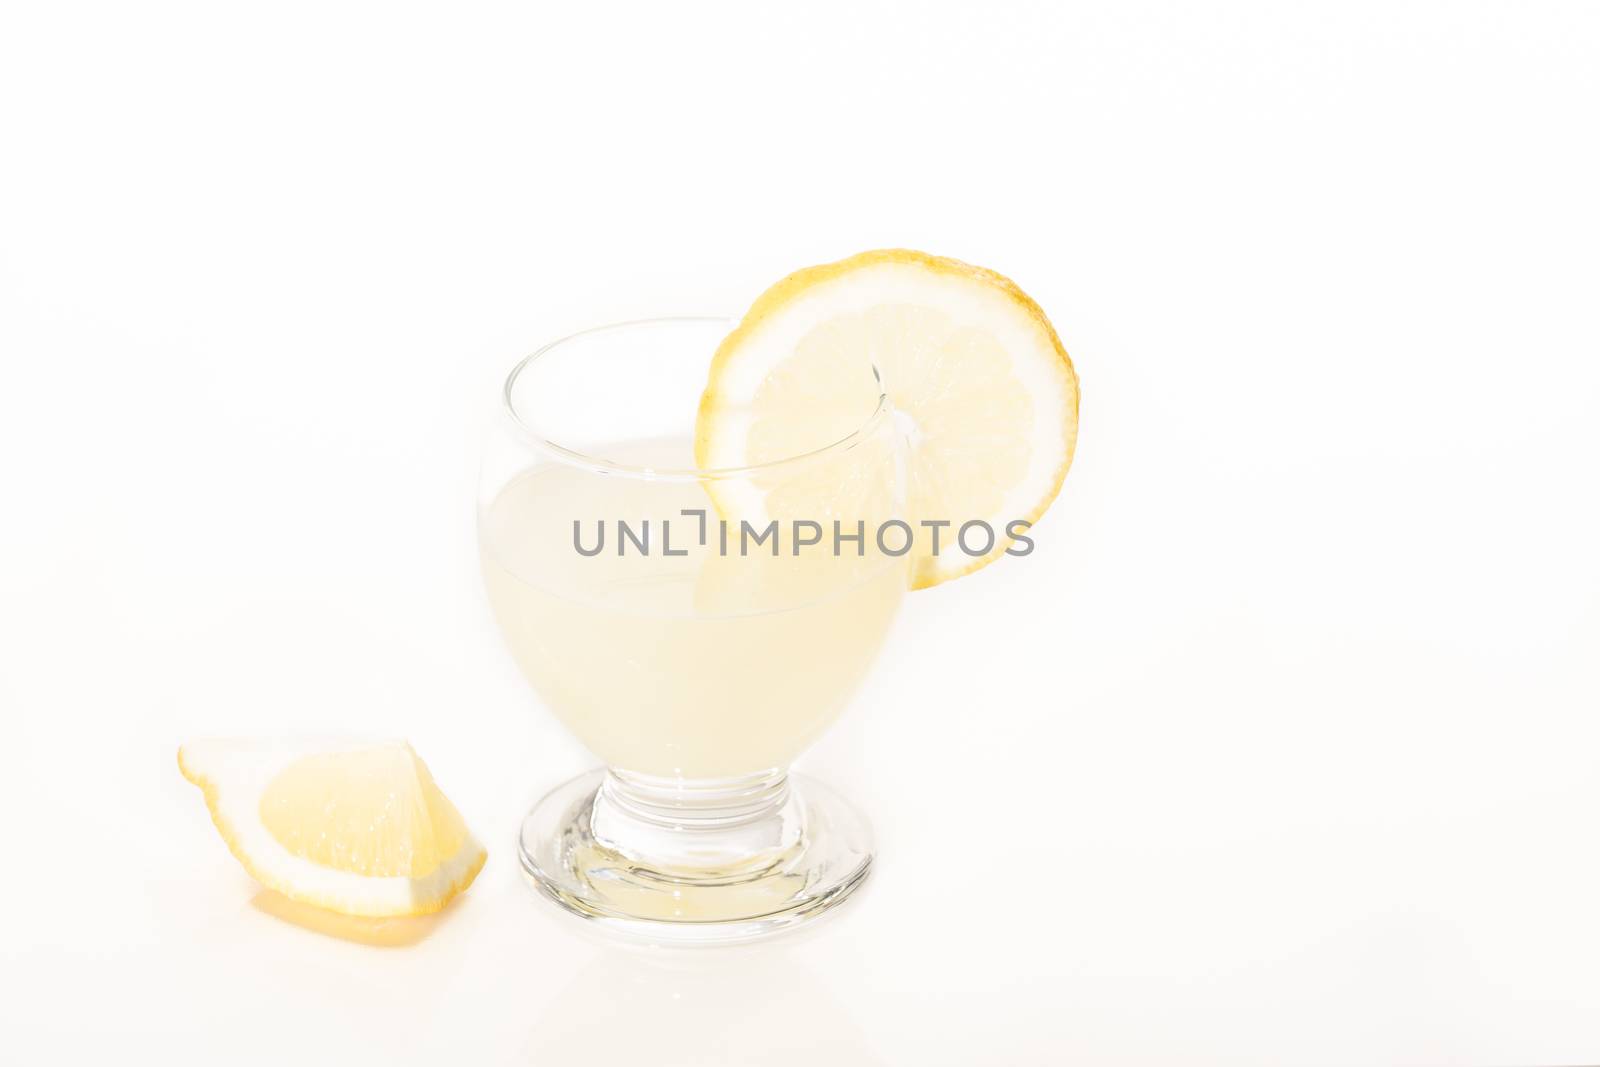 Detox glass of lemon juice, diet liver stomach on white background France